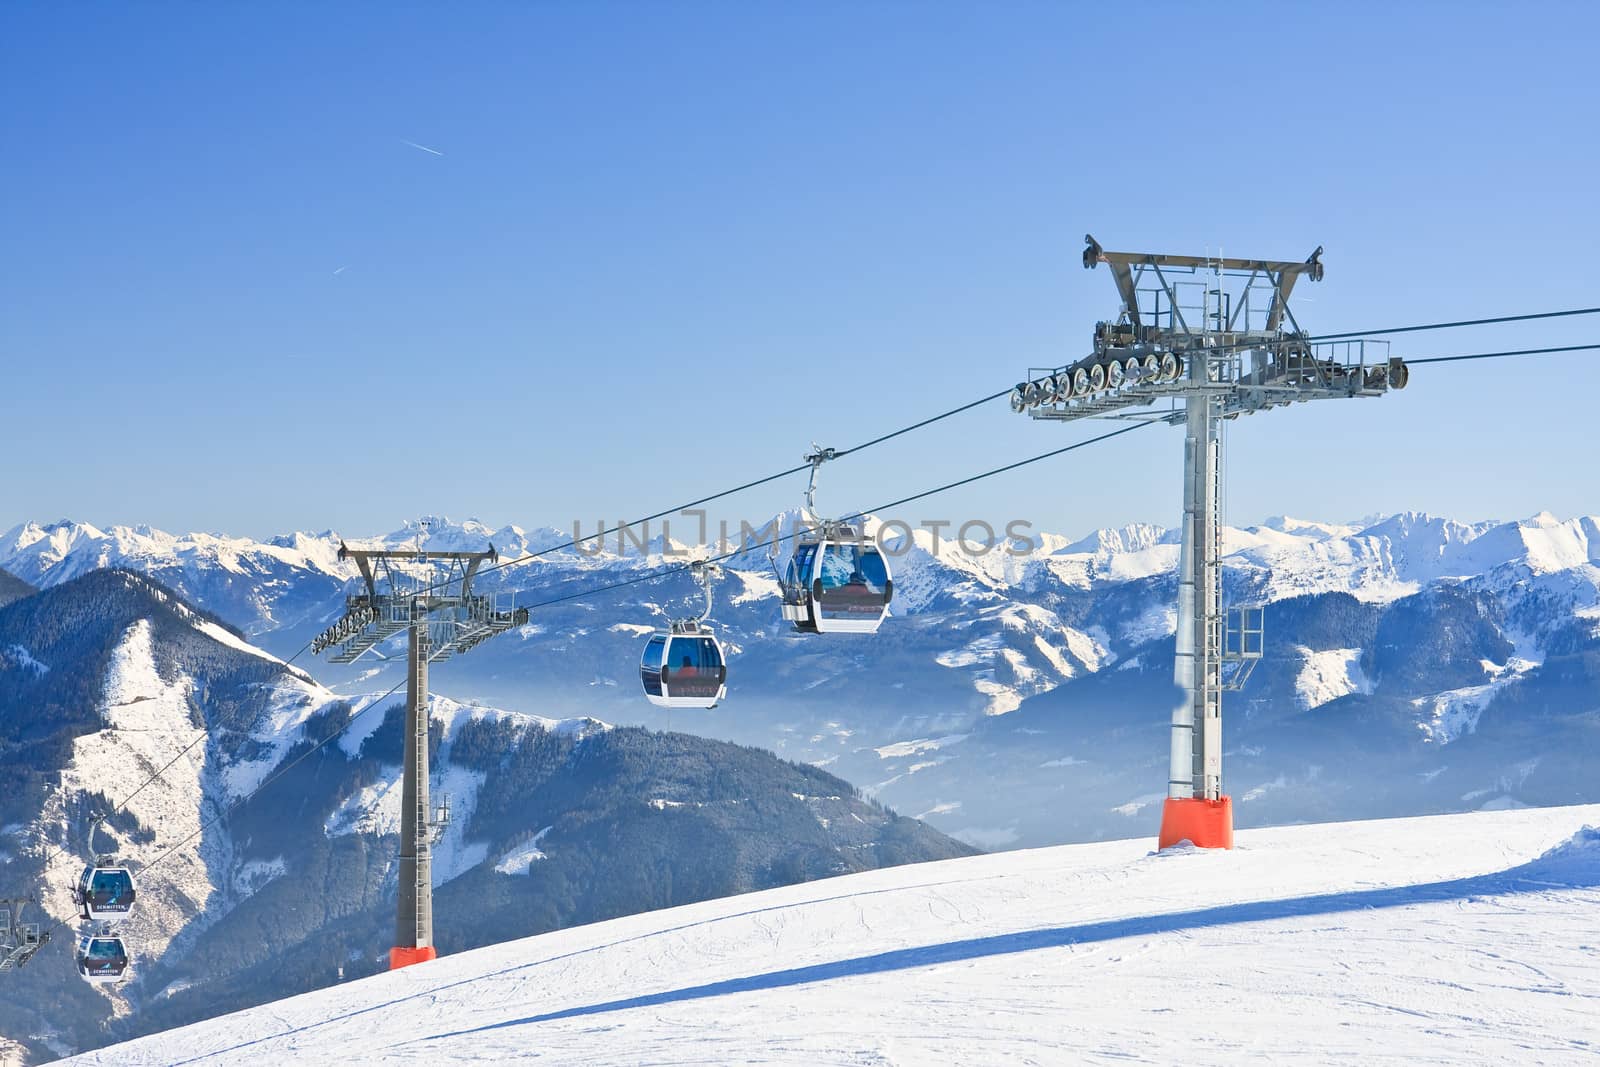 Ski resort Zell am See, Austrian Alps at winter by nikolpetr